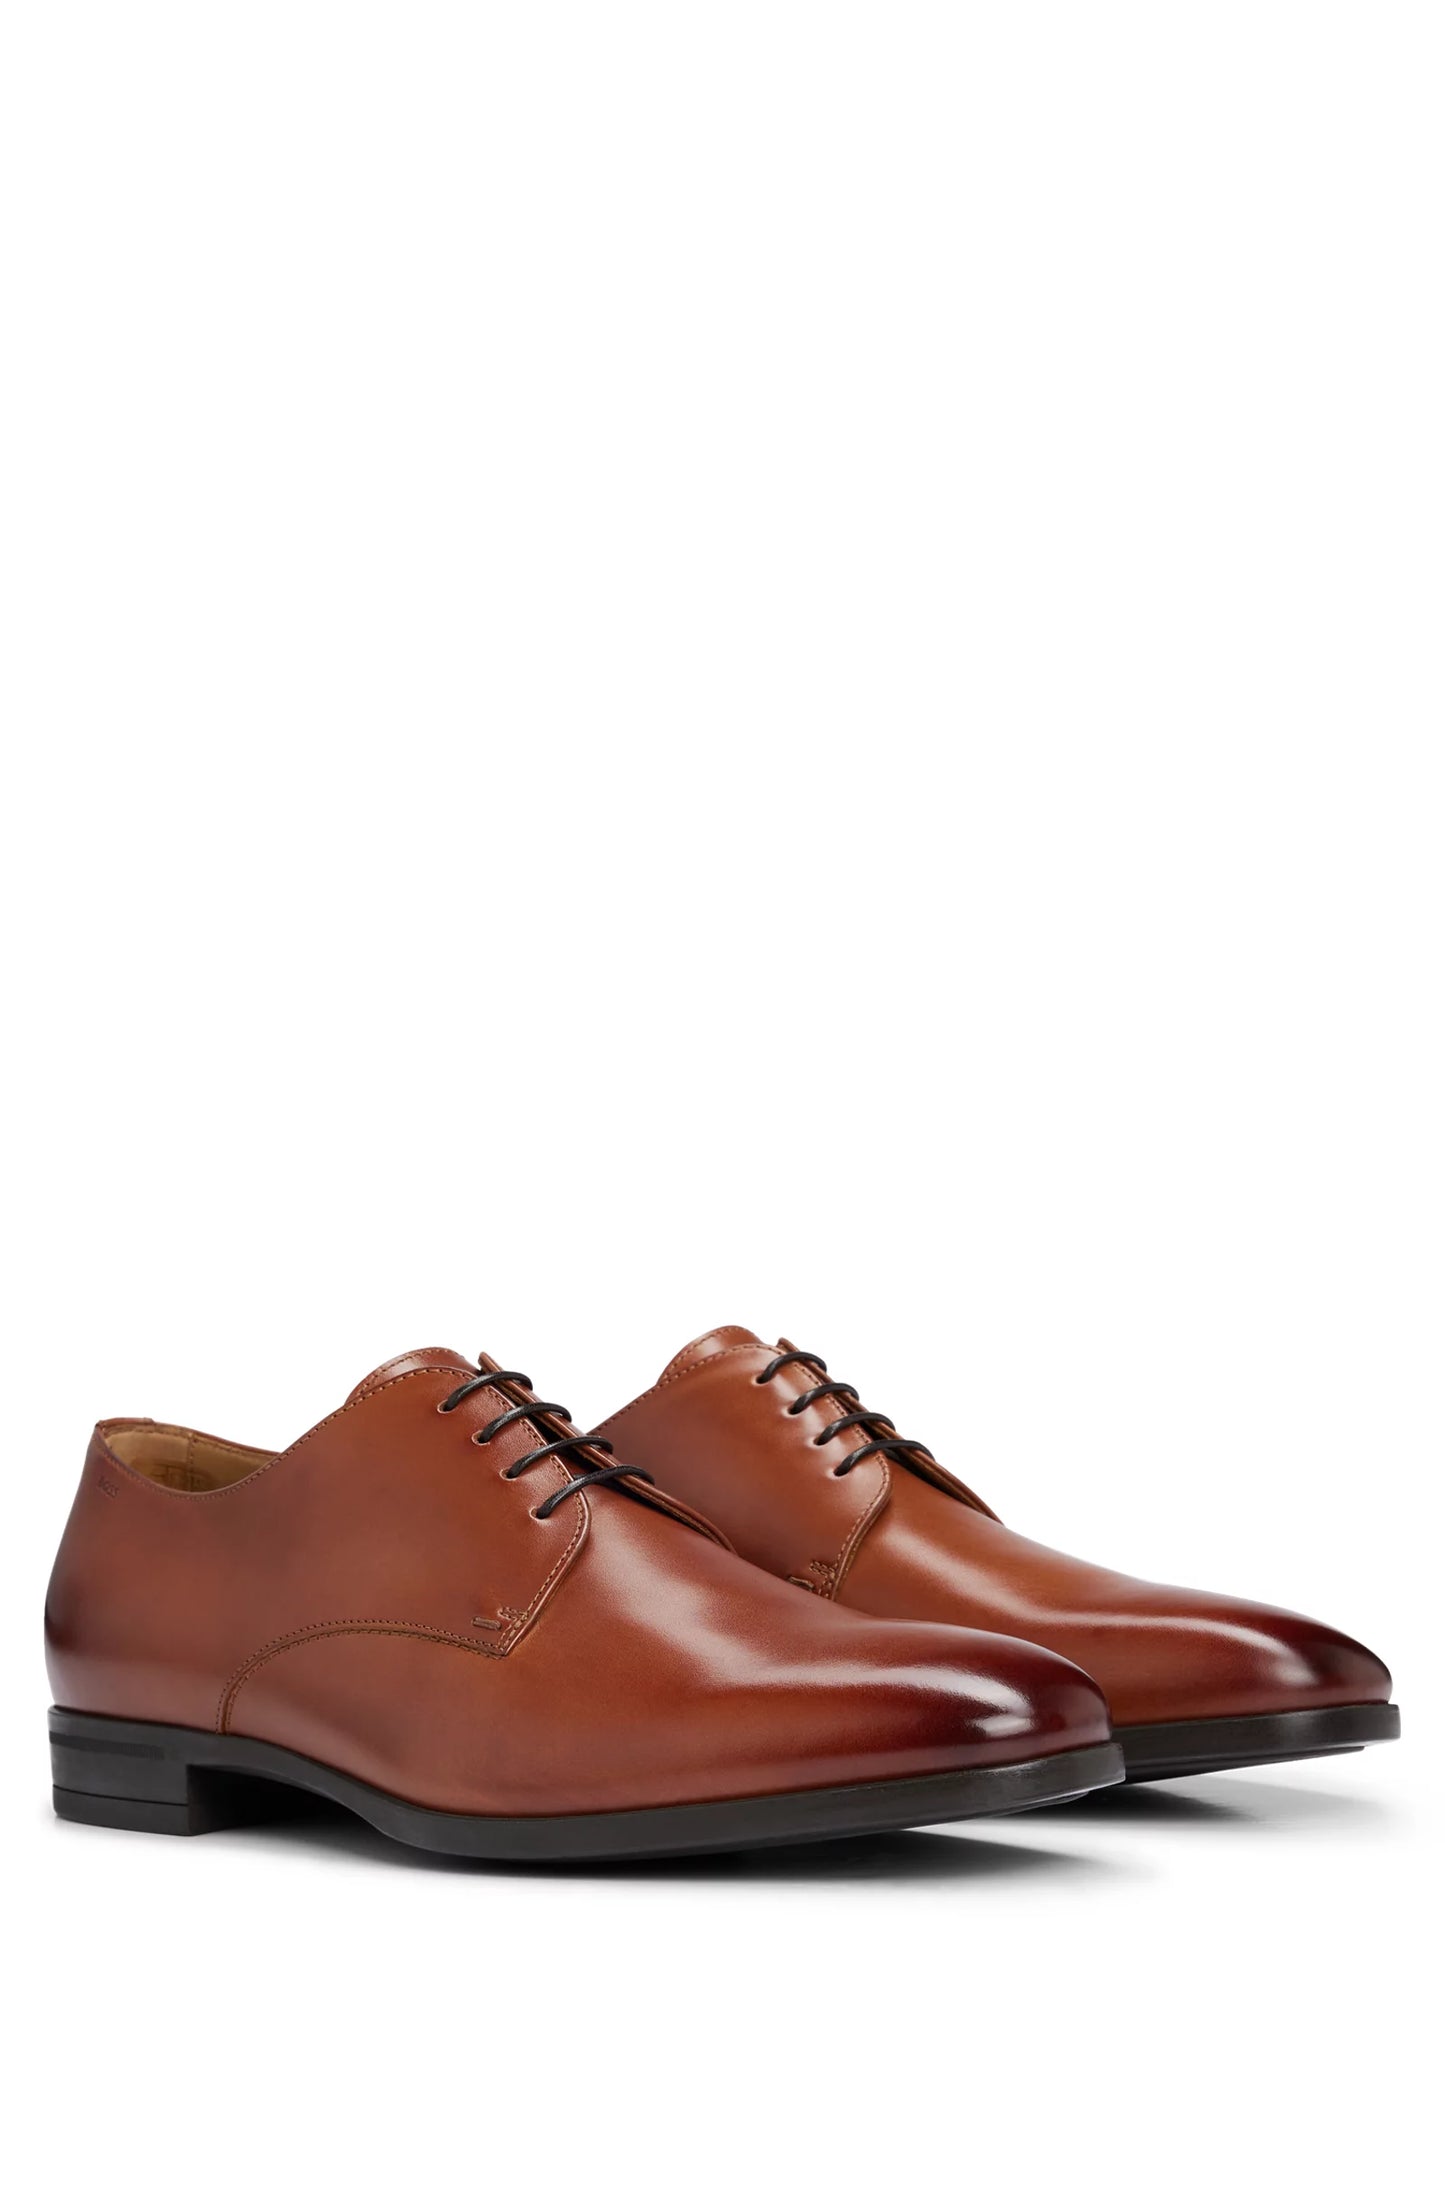 Hugo Boss Colby Derby Shoe For Men (Medium Brown) US 11.5